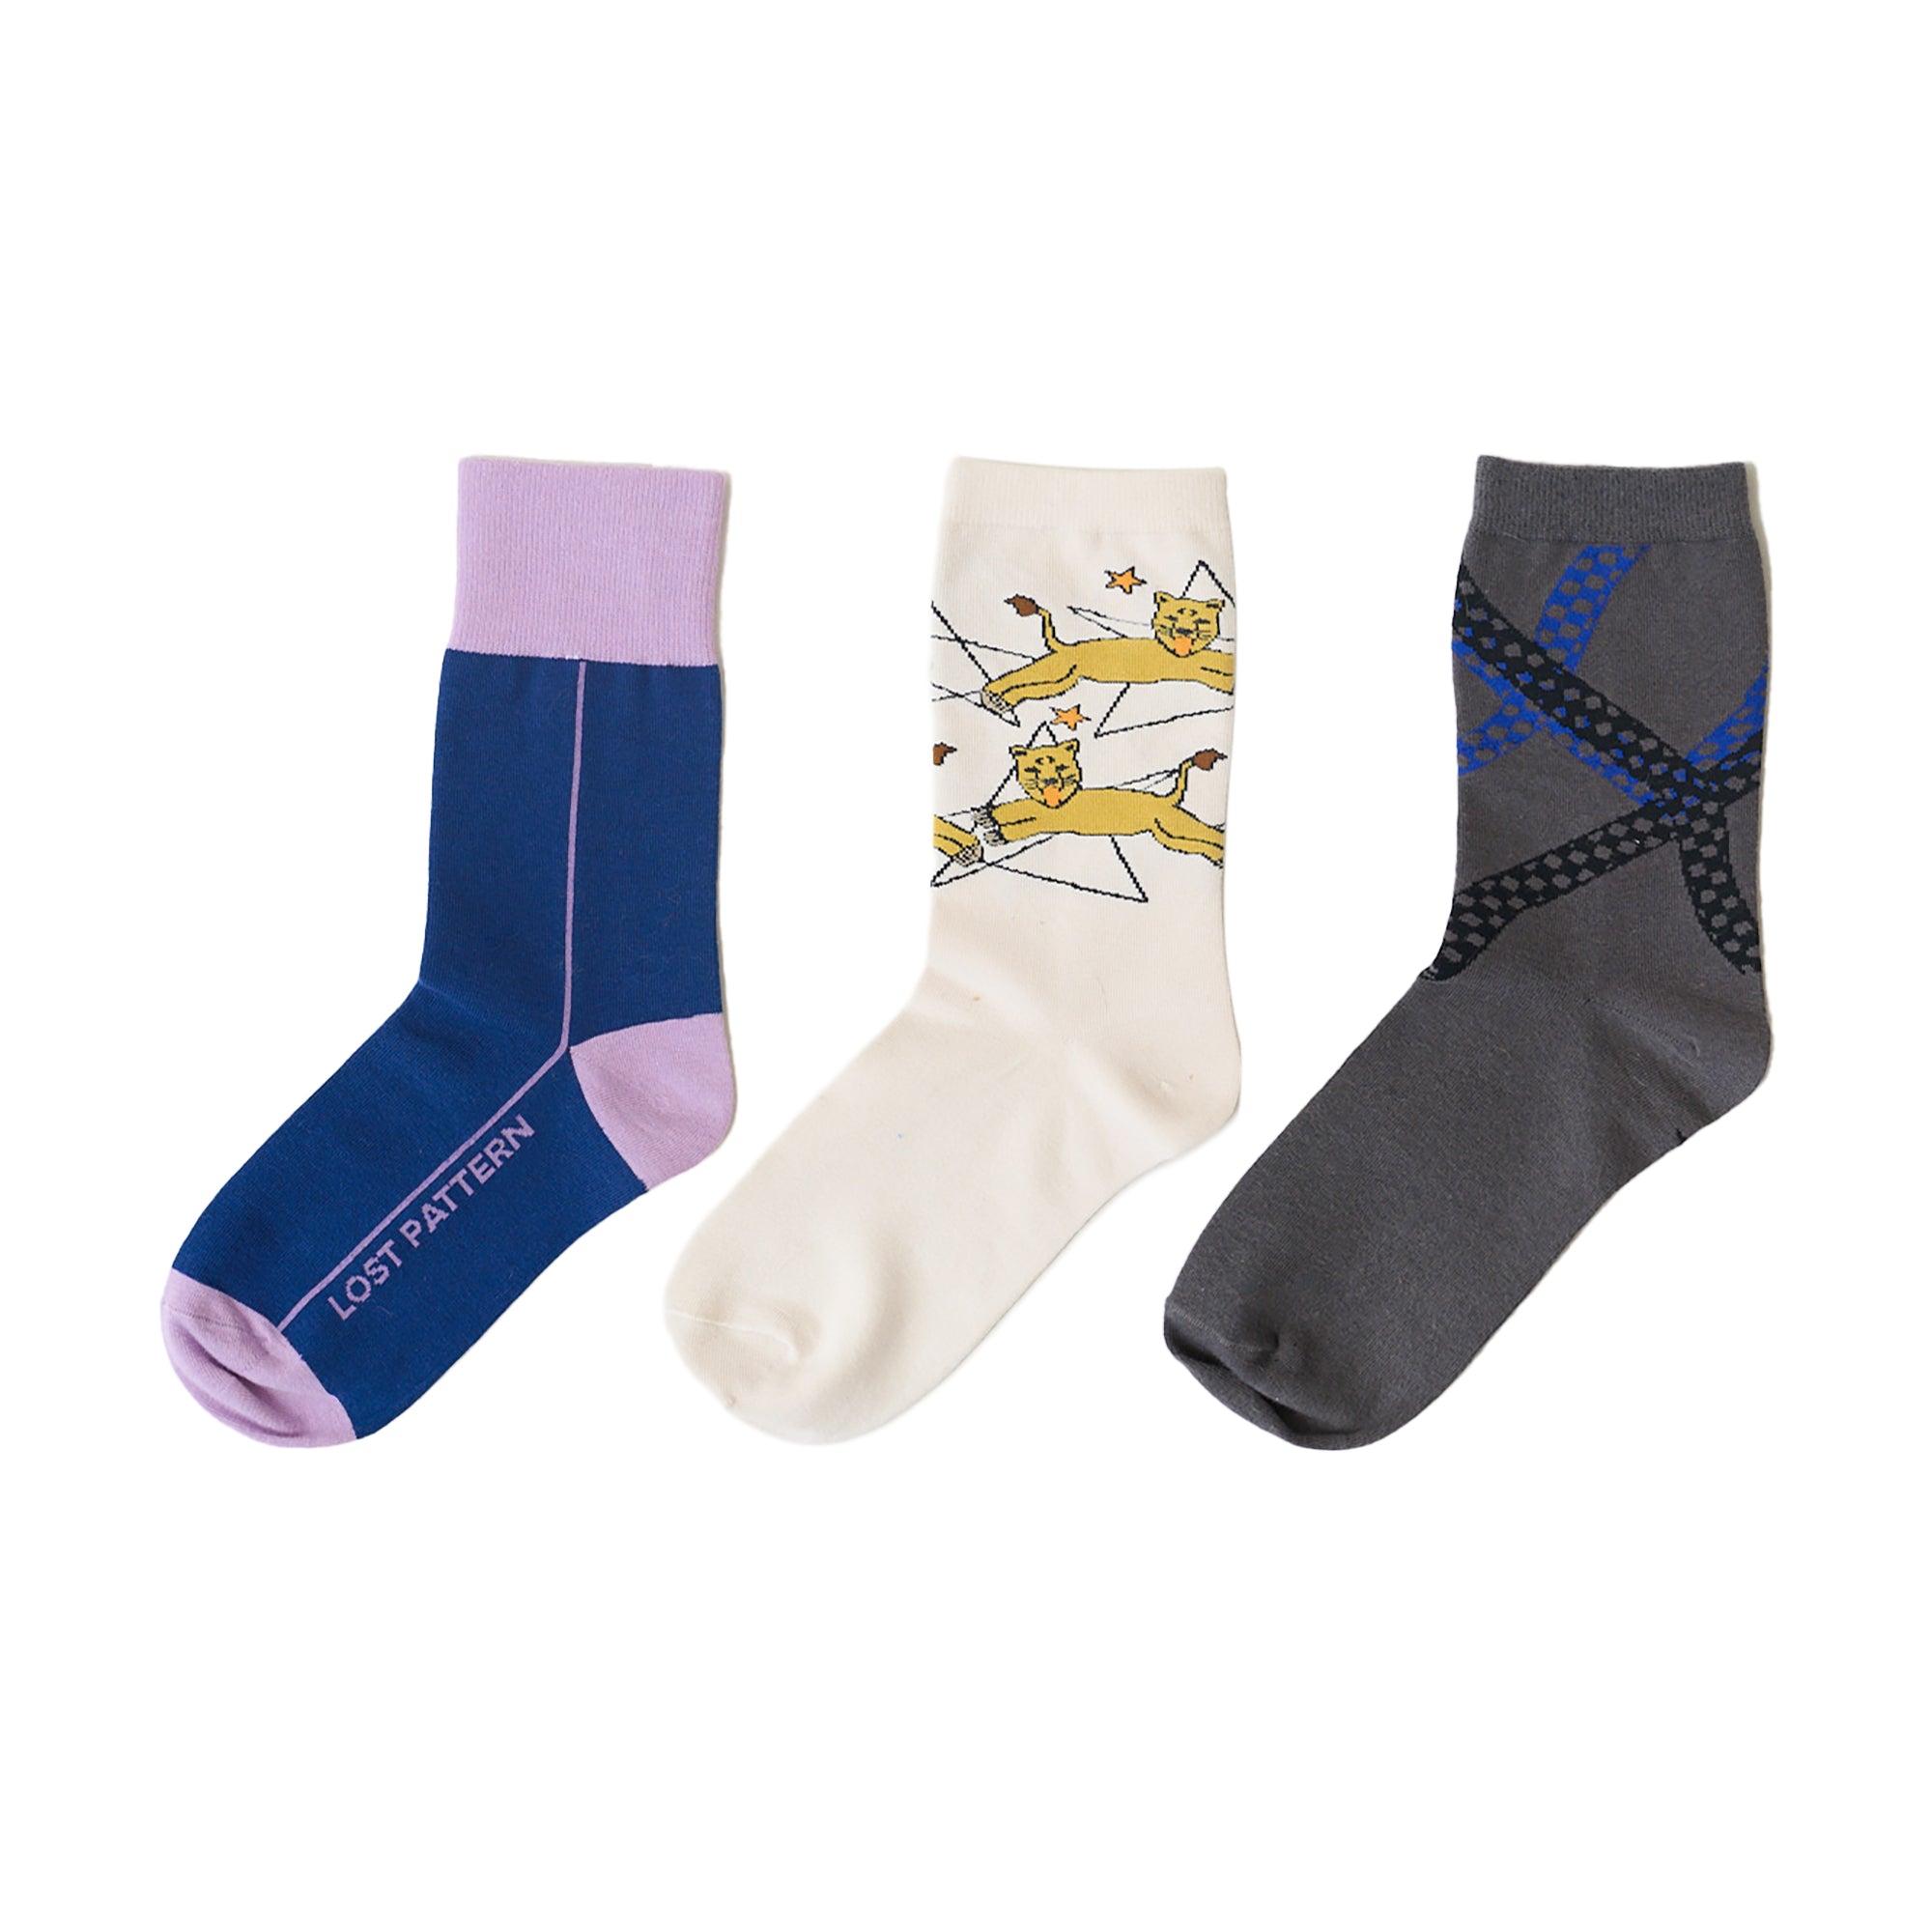 Shantall Lacayo x Lost Pattern Cotton Socks - Set of 3 - Electric blue & off white & dark grey - LOST PATTERN Socks